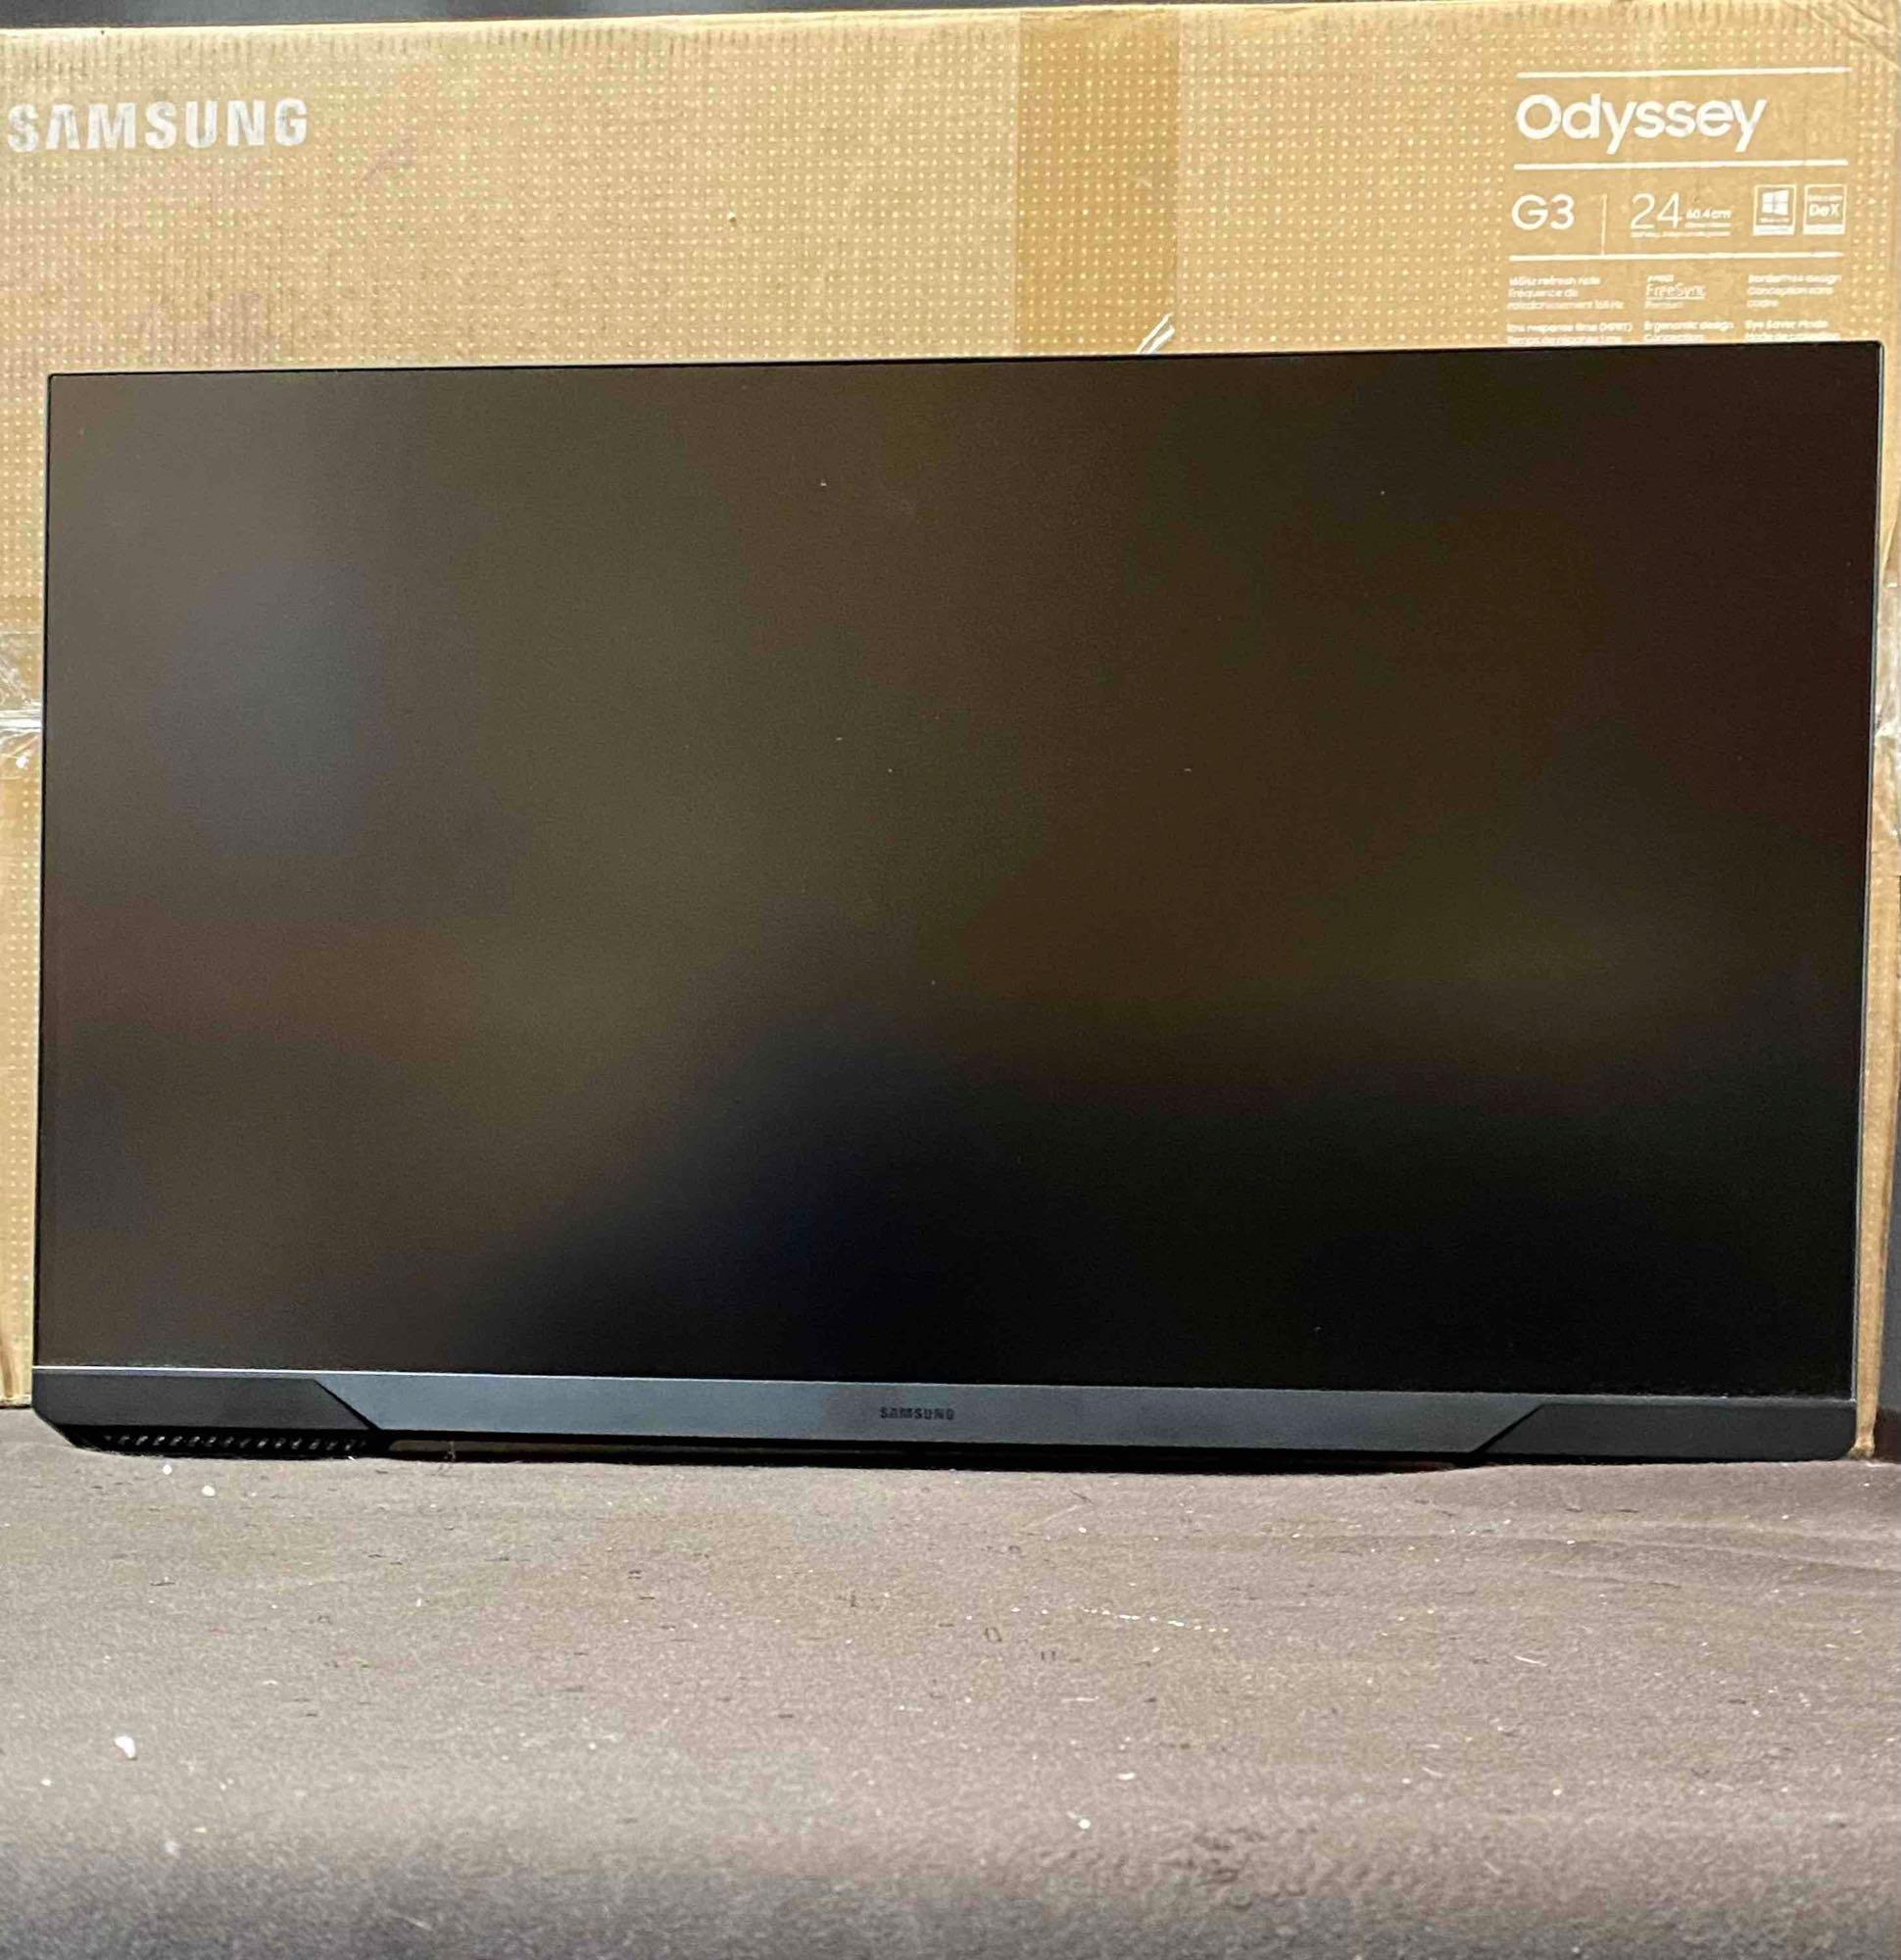 Samsung Odyssey Gaming Monitor